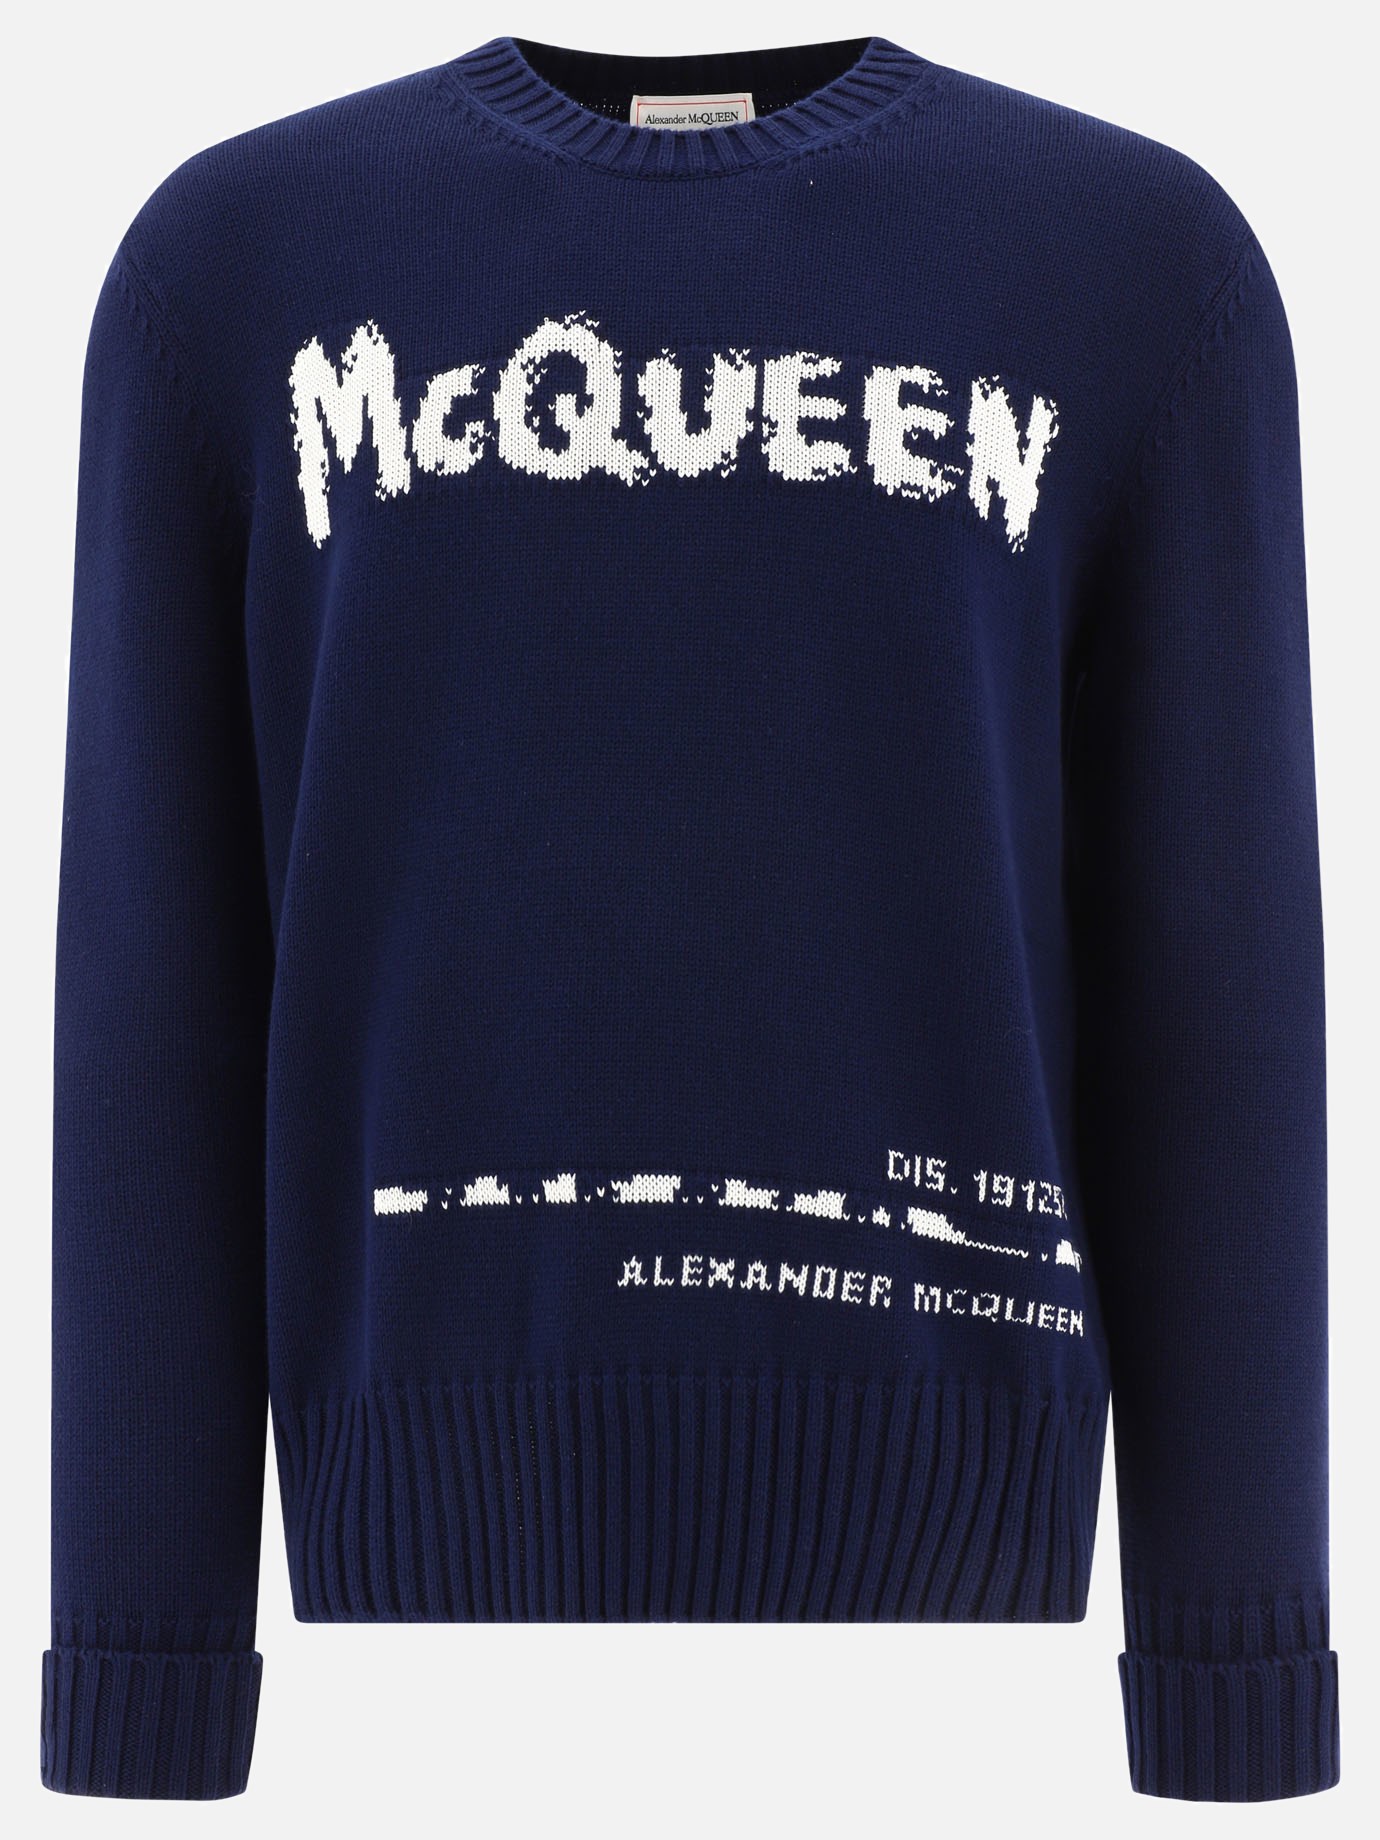  Graffiti  sweaterby Alexander McQueen - 4